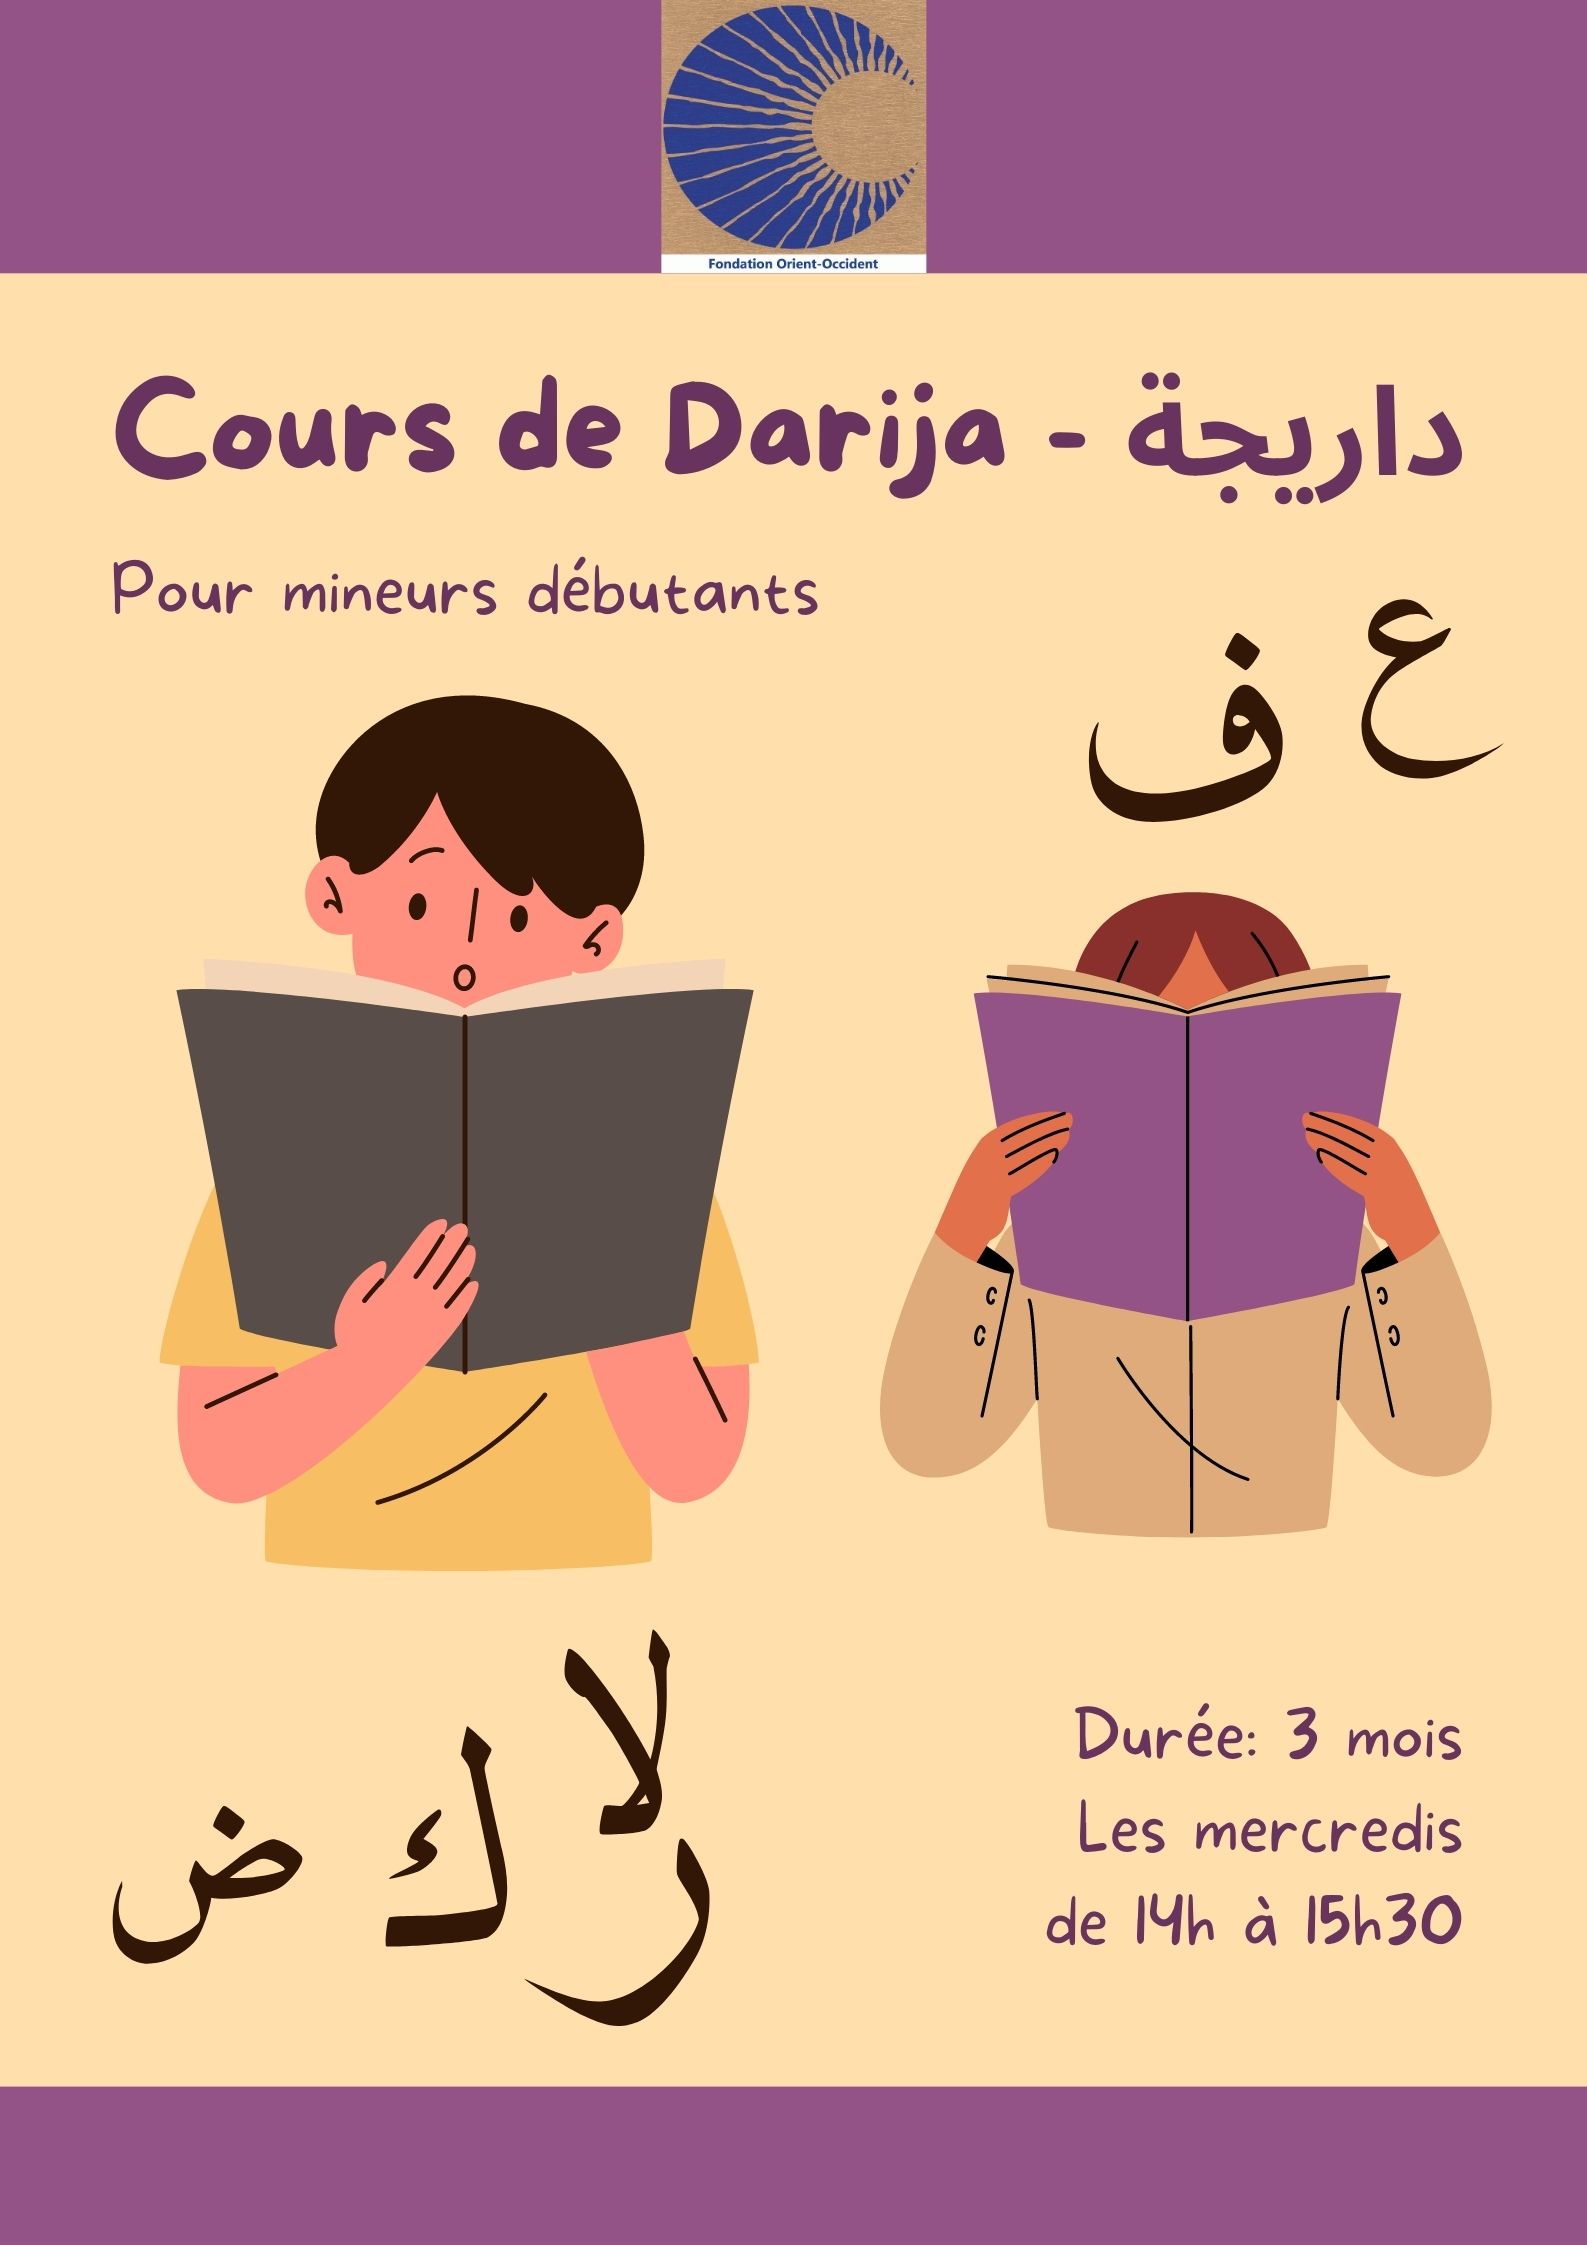 New Darija course